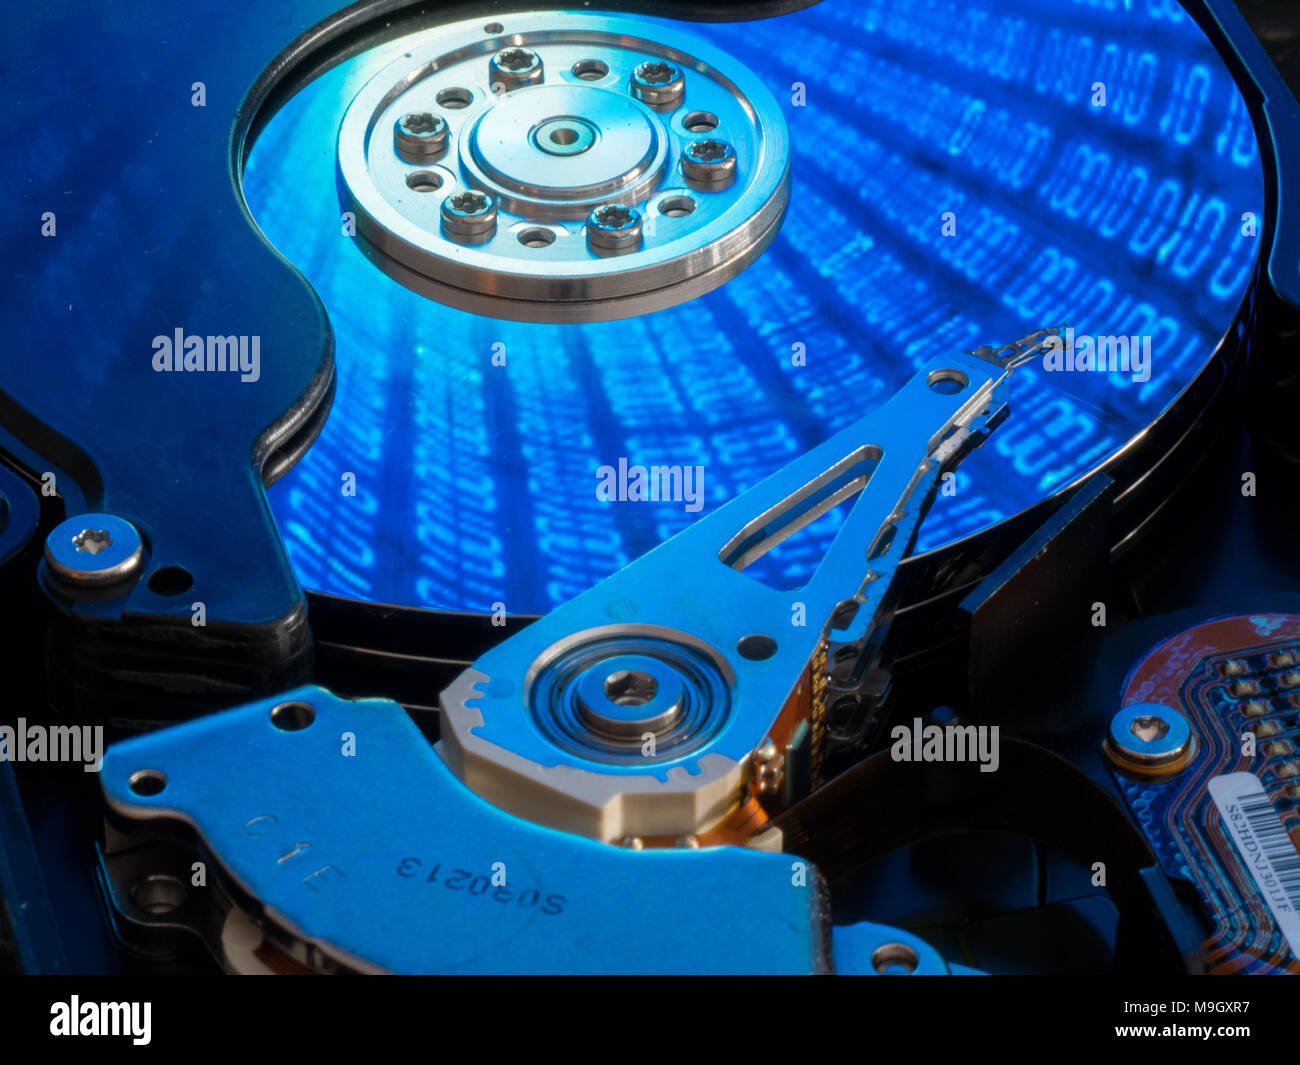 Computer hard disk (hard drive). Stock Photo